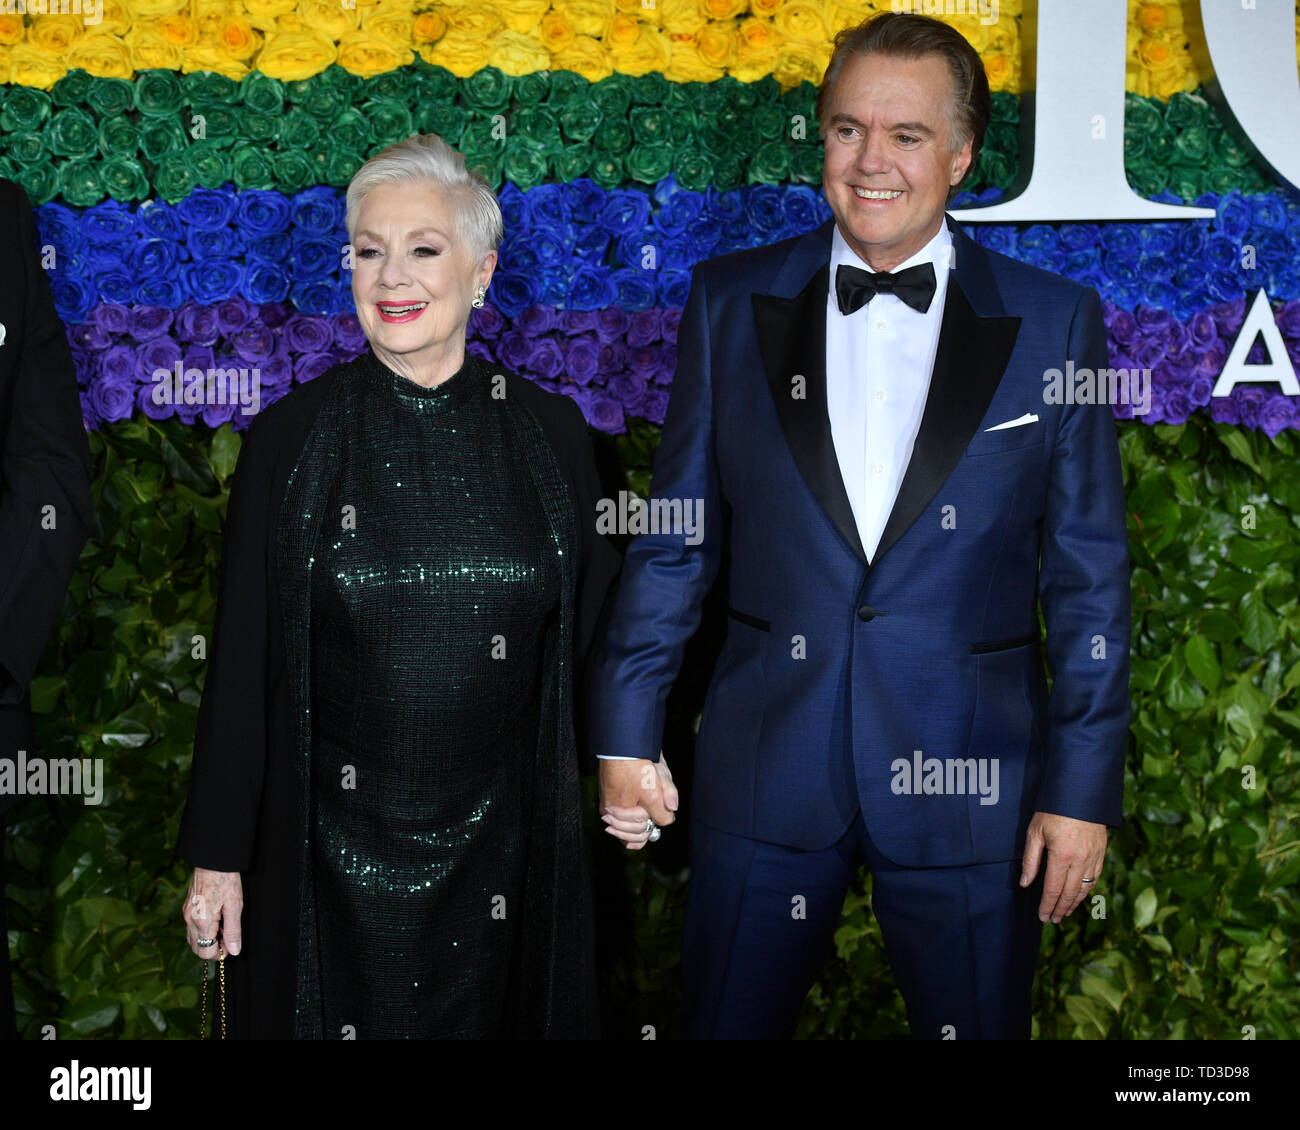 73rd Annual Tony Awards, Arrivals, Radio City Music Hall, New York, USA - 09 Jun 2019 - Shirley Jones and Shaun Cassidy Stock Photo